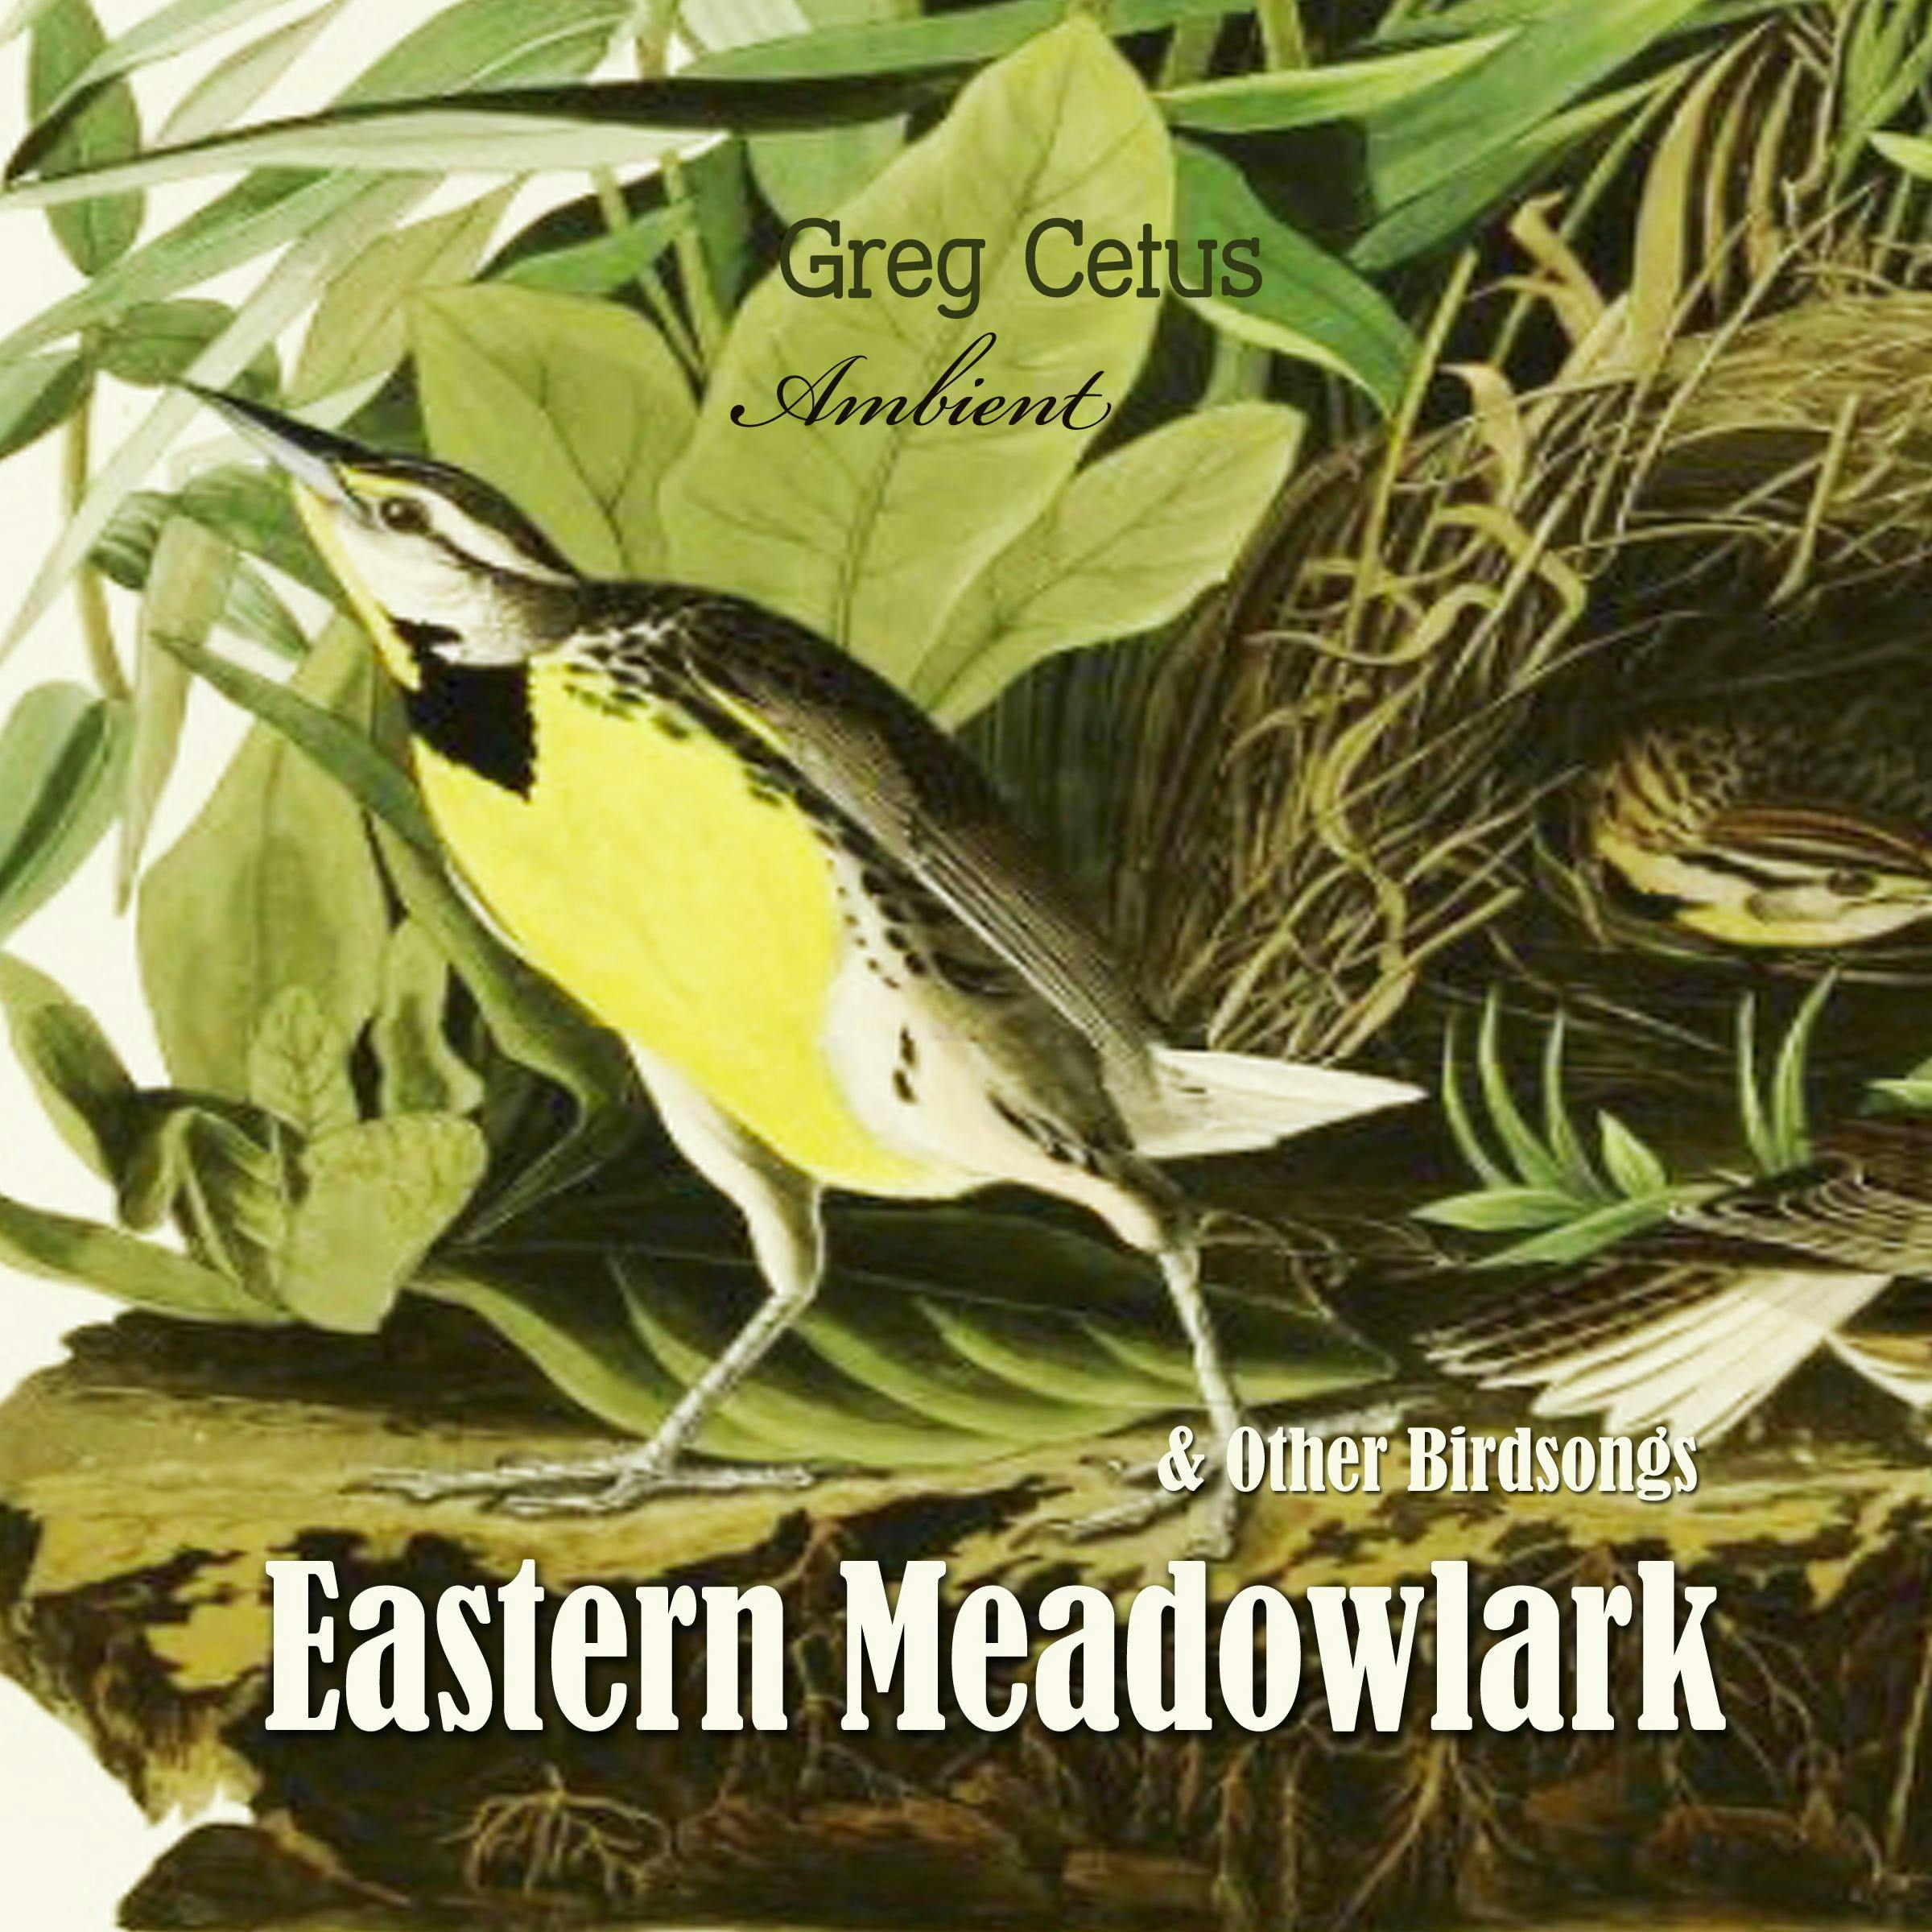 Eastern Meadowlark and Other Bird Songs - Greg Cetus